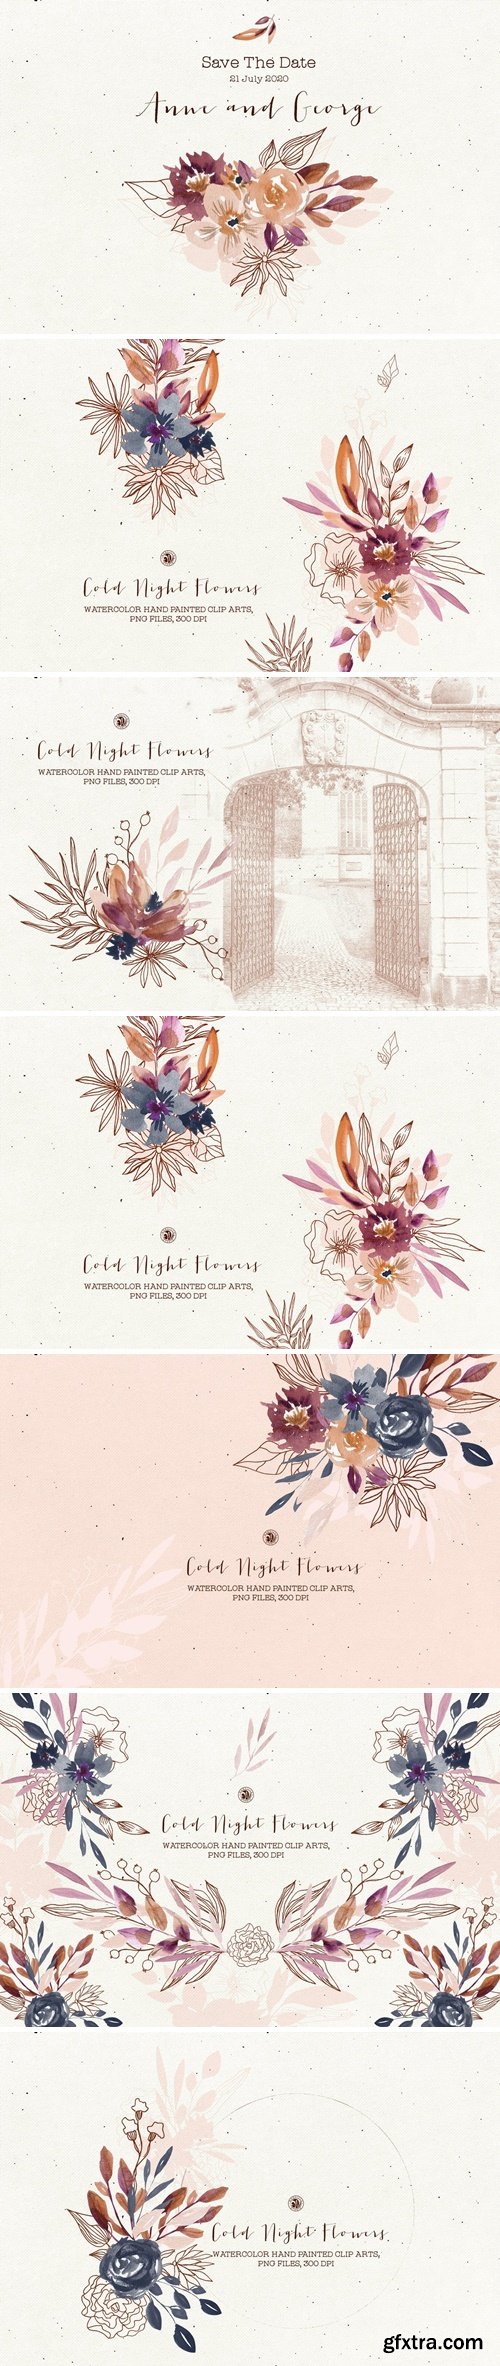 CM - Cold Night Flowers 3748433